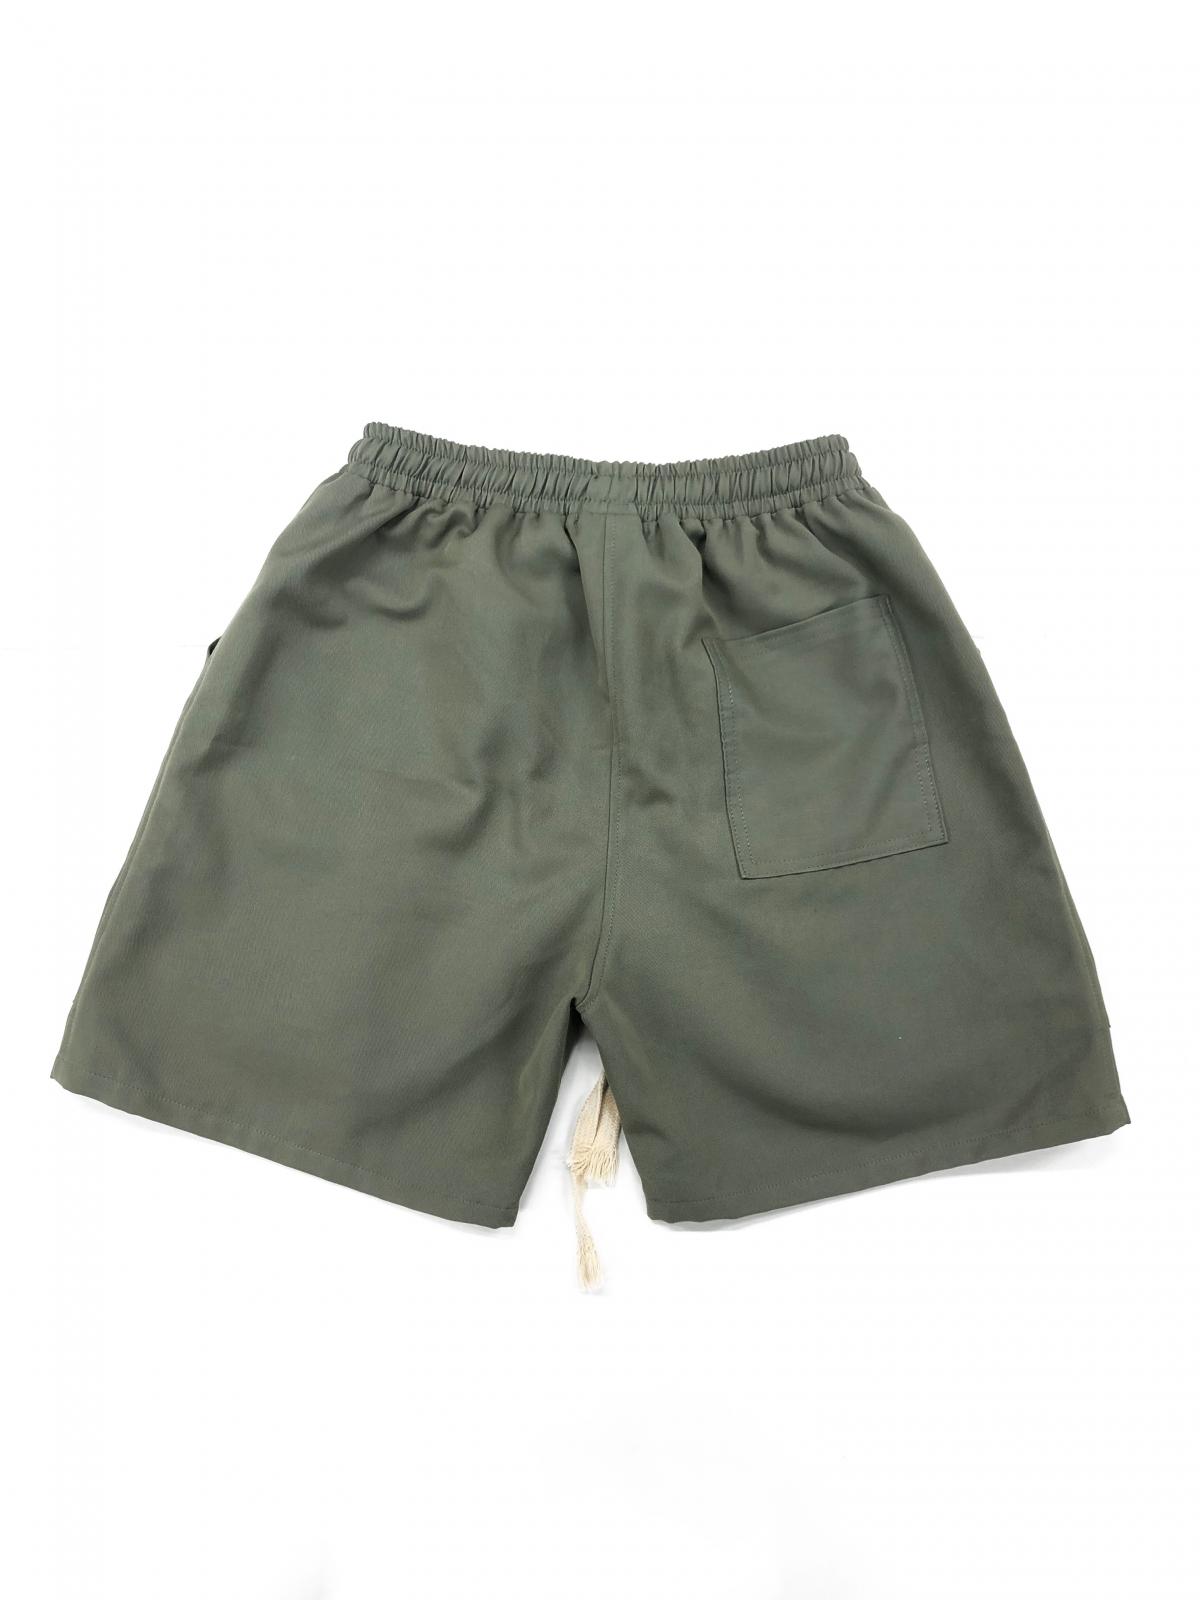 Men's Kaki Shorts SS0009 #1